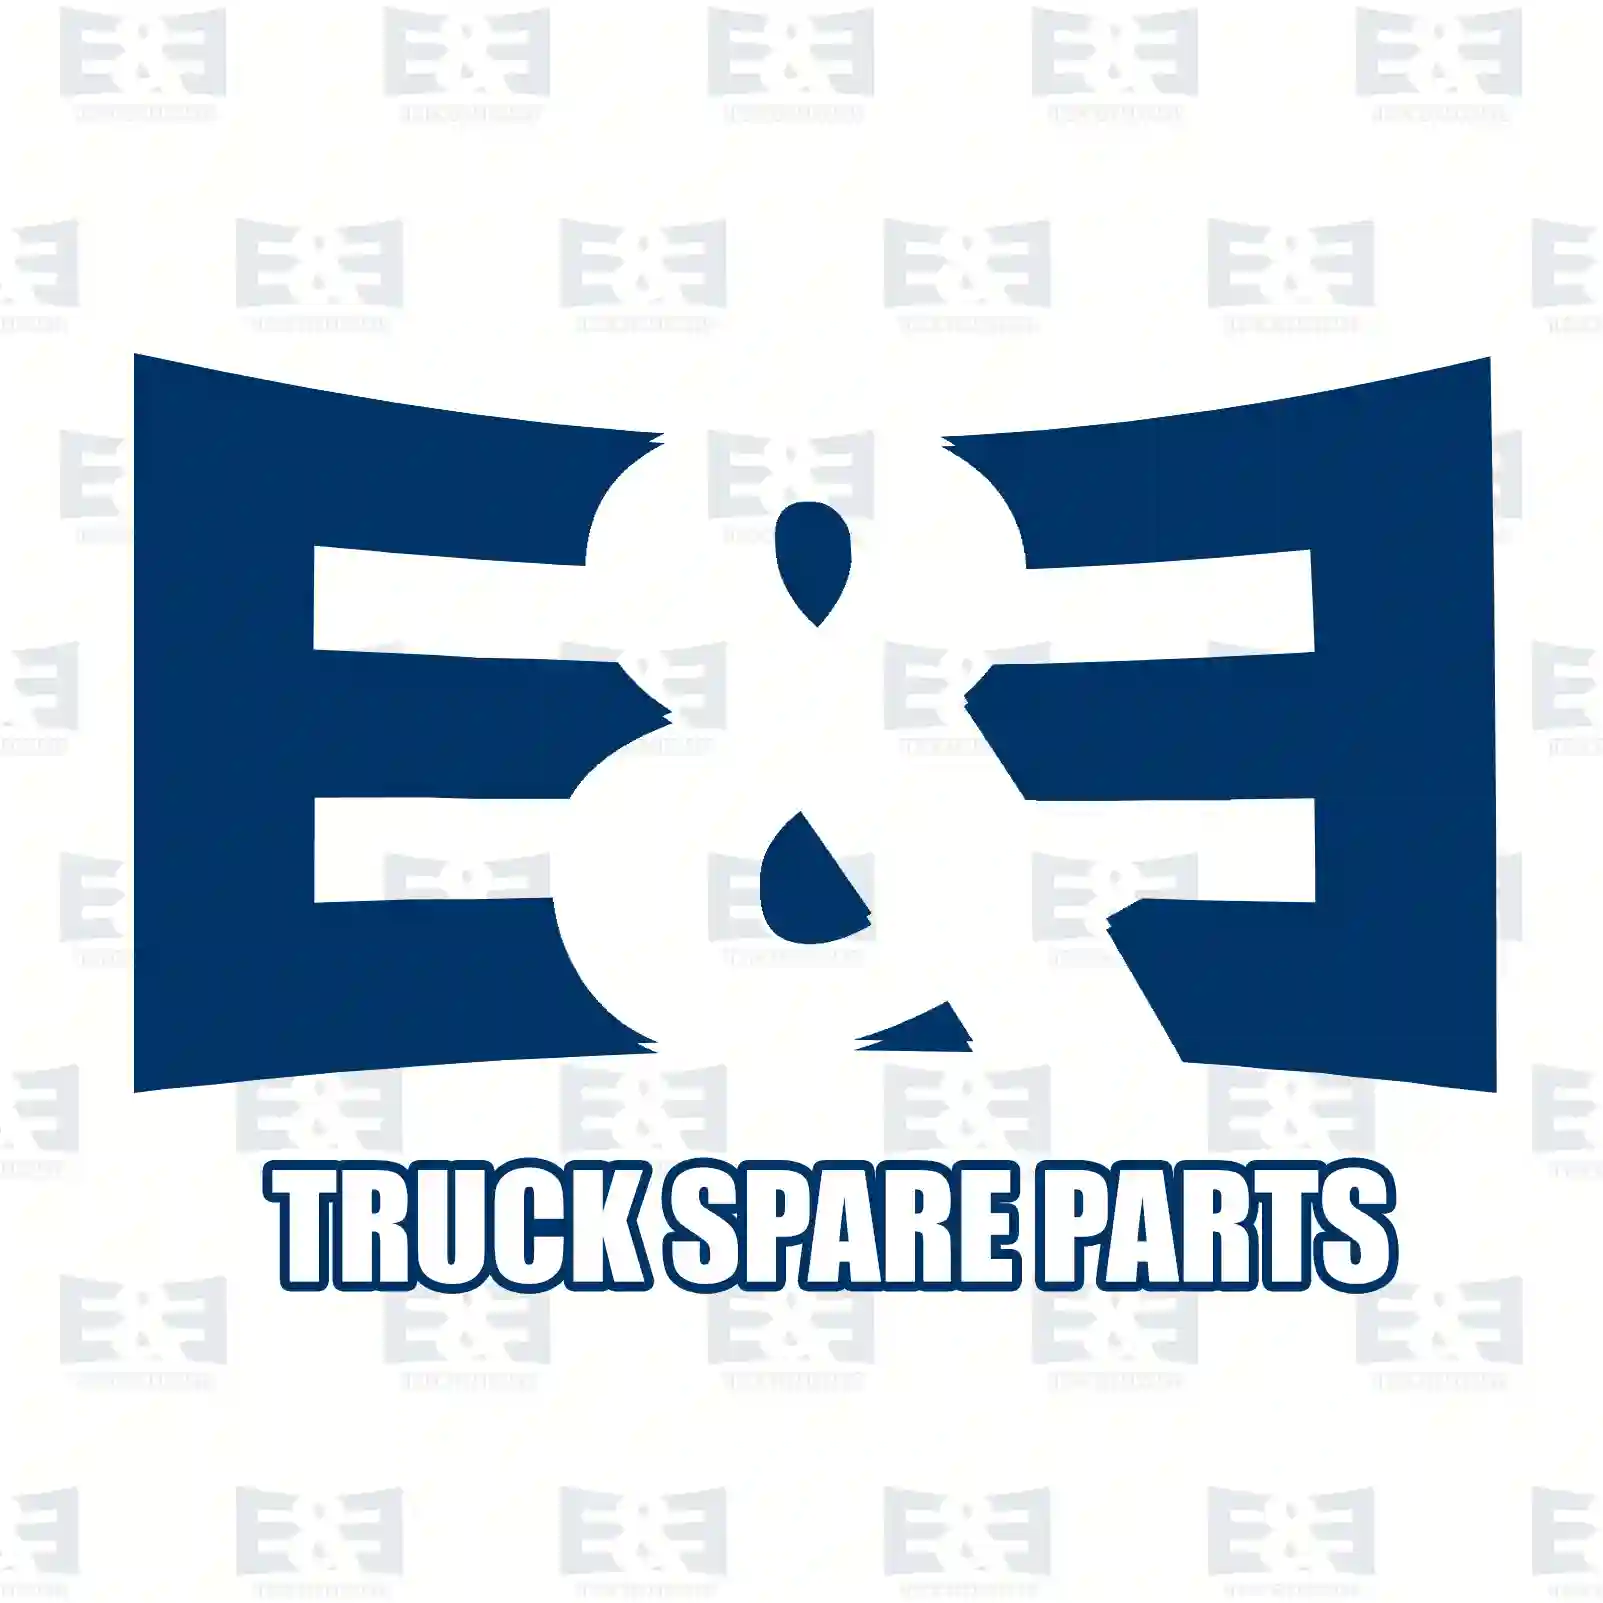 Clutch cylinder, 2E2288924, 41211007, 41285311, ZG30290-0008 ||  2E2288924 E&E Truck Spare Parts | Truck Spare Parts, Auotomotive Spare Parts Clutch cylinder, 2E2288924, 41211007, 41285311, ZG30290-0008 ||  2E2288924 E&E Truck Spare Parts | Truck Spare Parts, Auotomotive Spare Parts